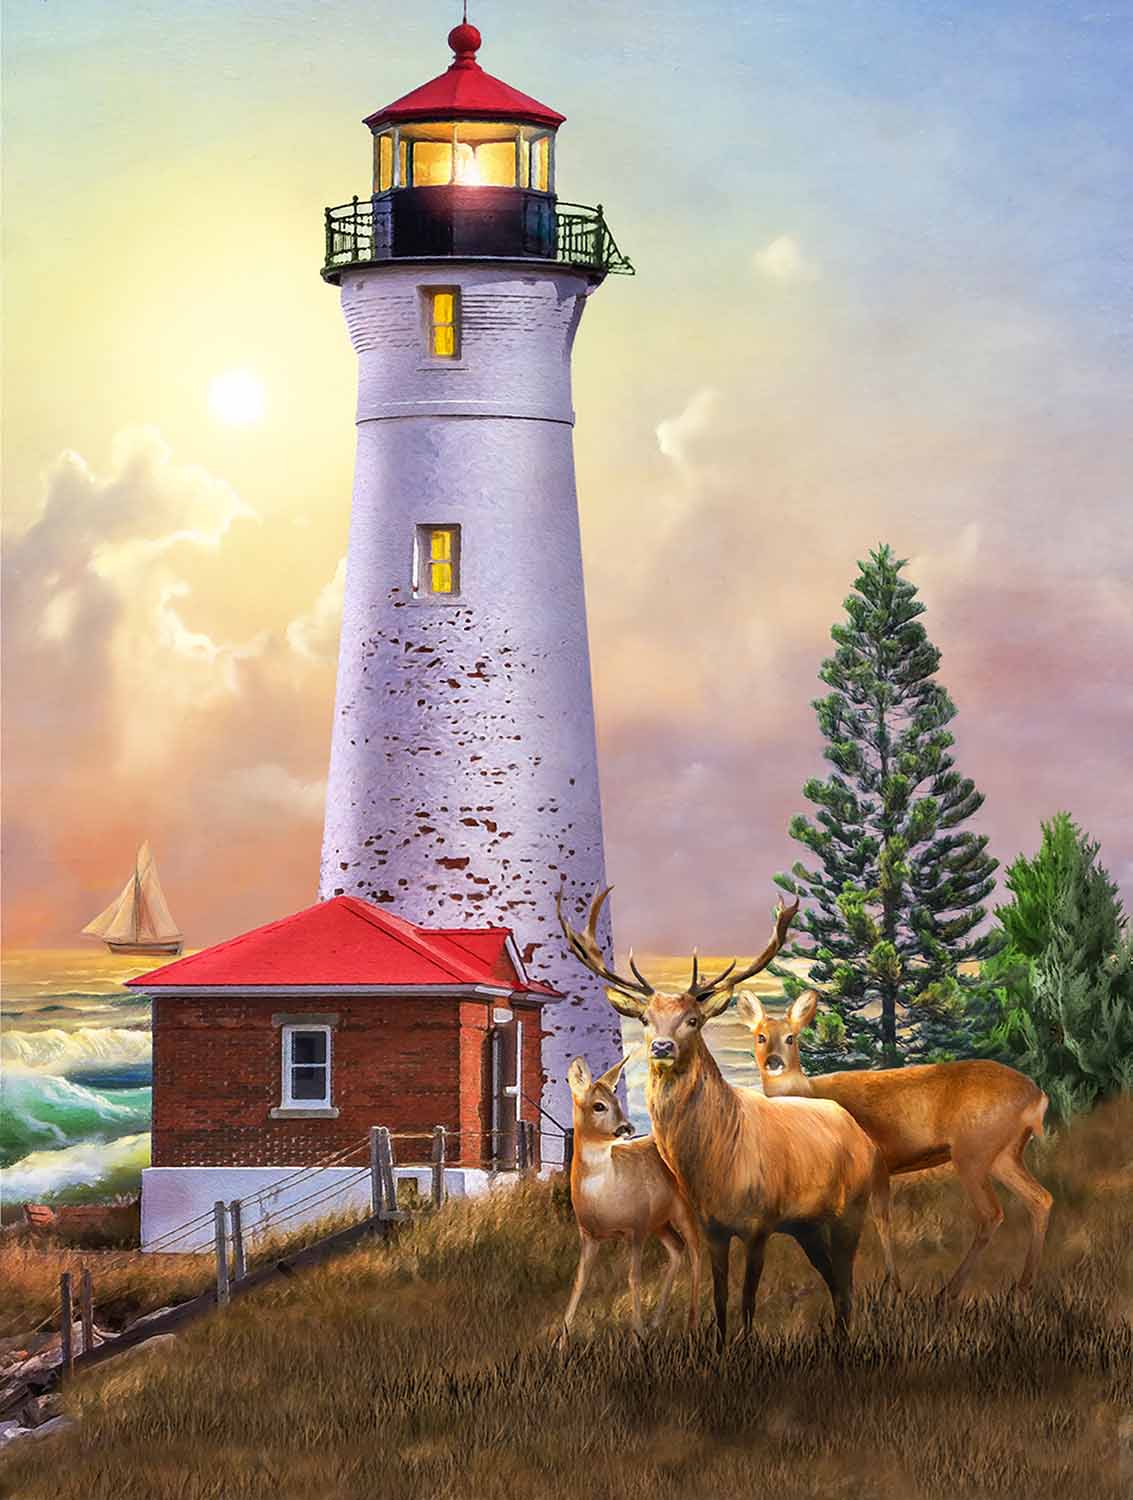 Crisp Point Lighthouse Lighthouse Jigsaw Puzzle